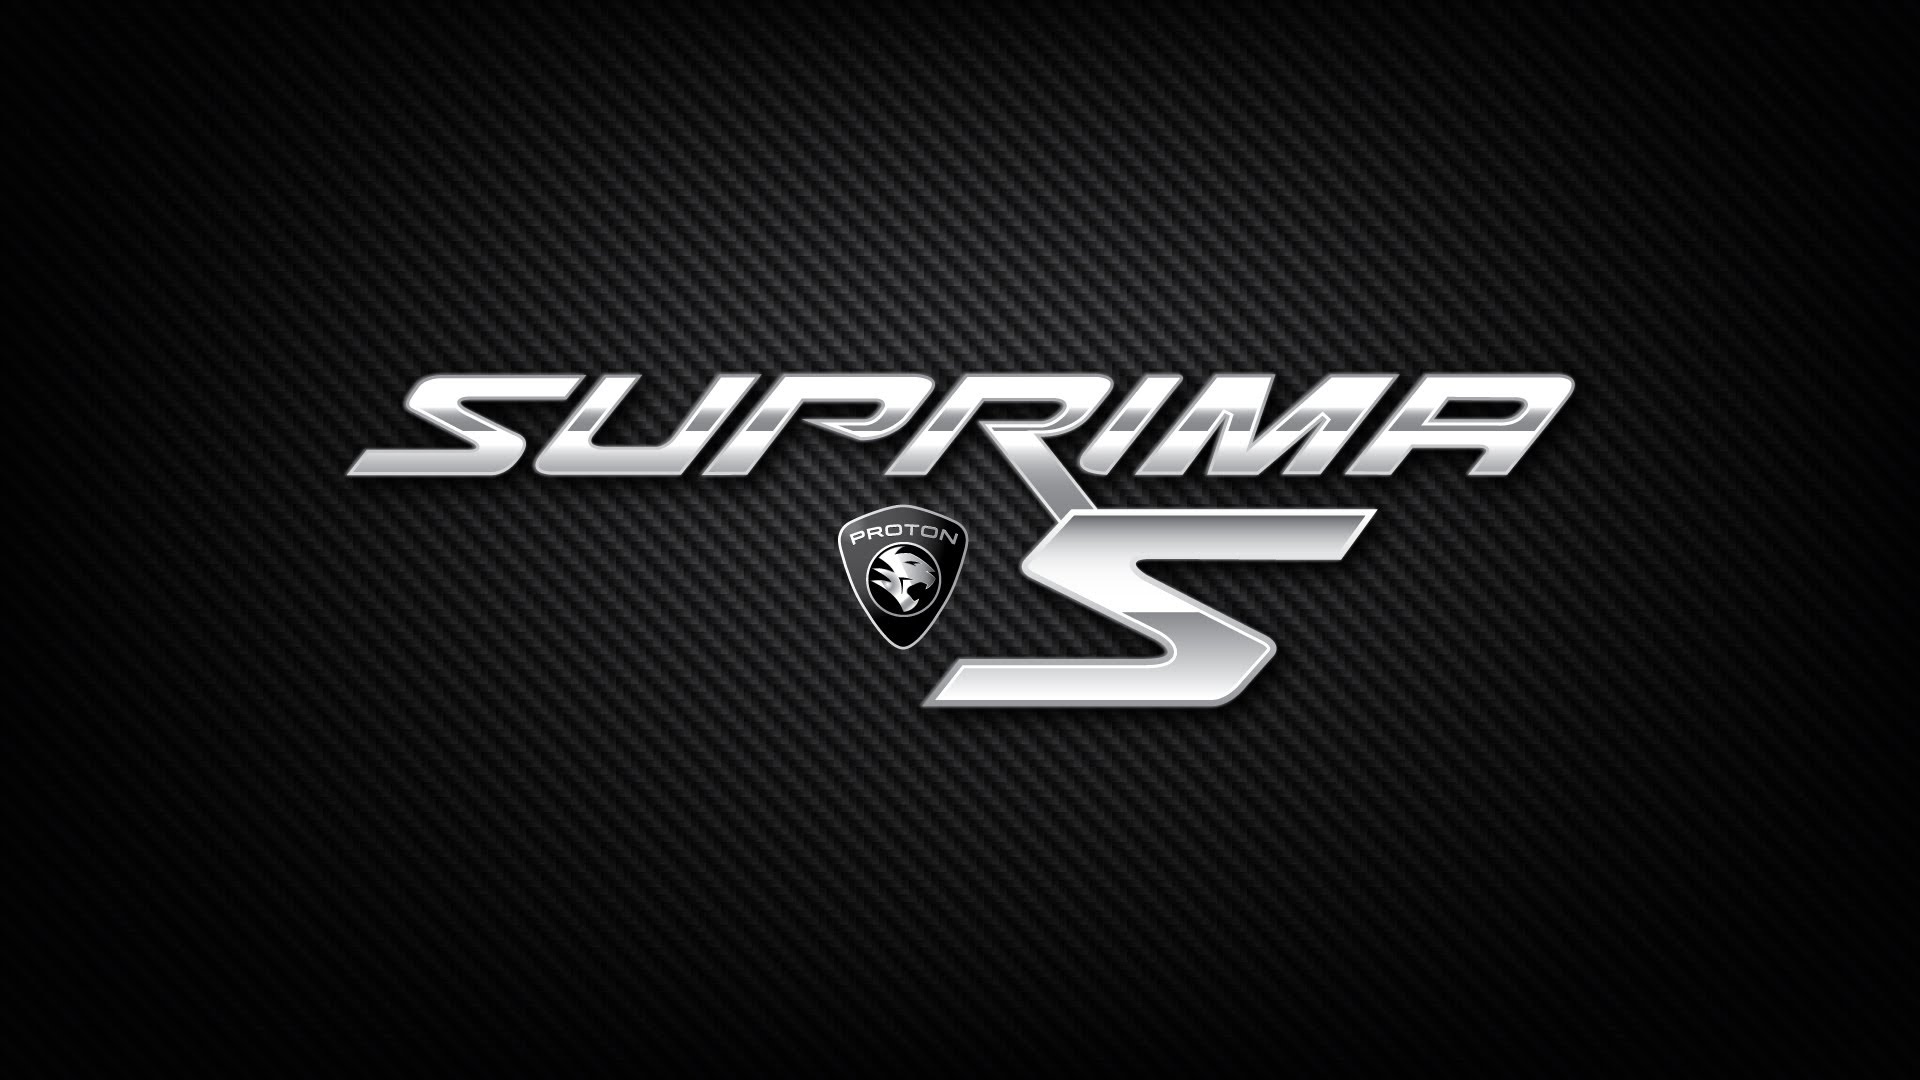 SUPRIMA S Logo photo - 1